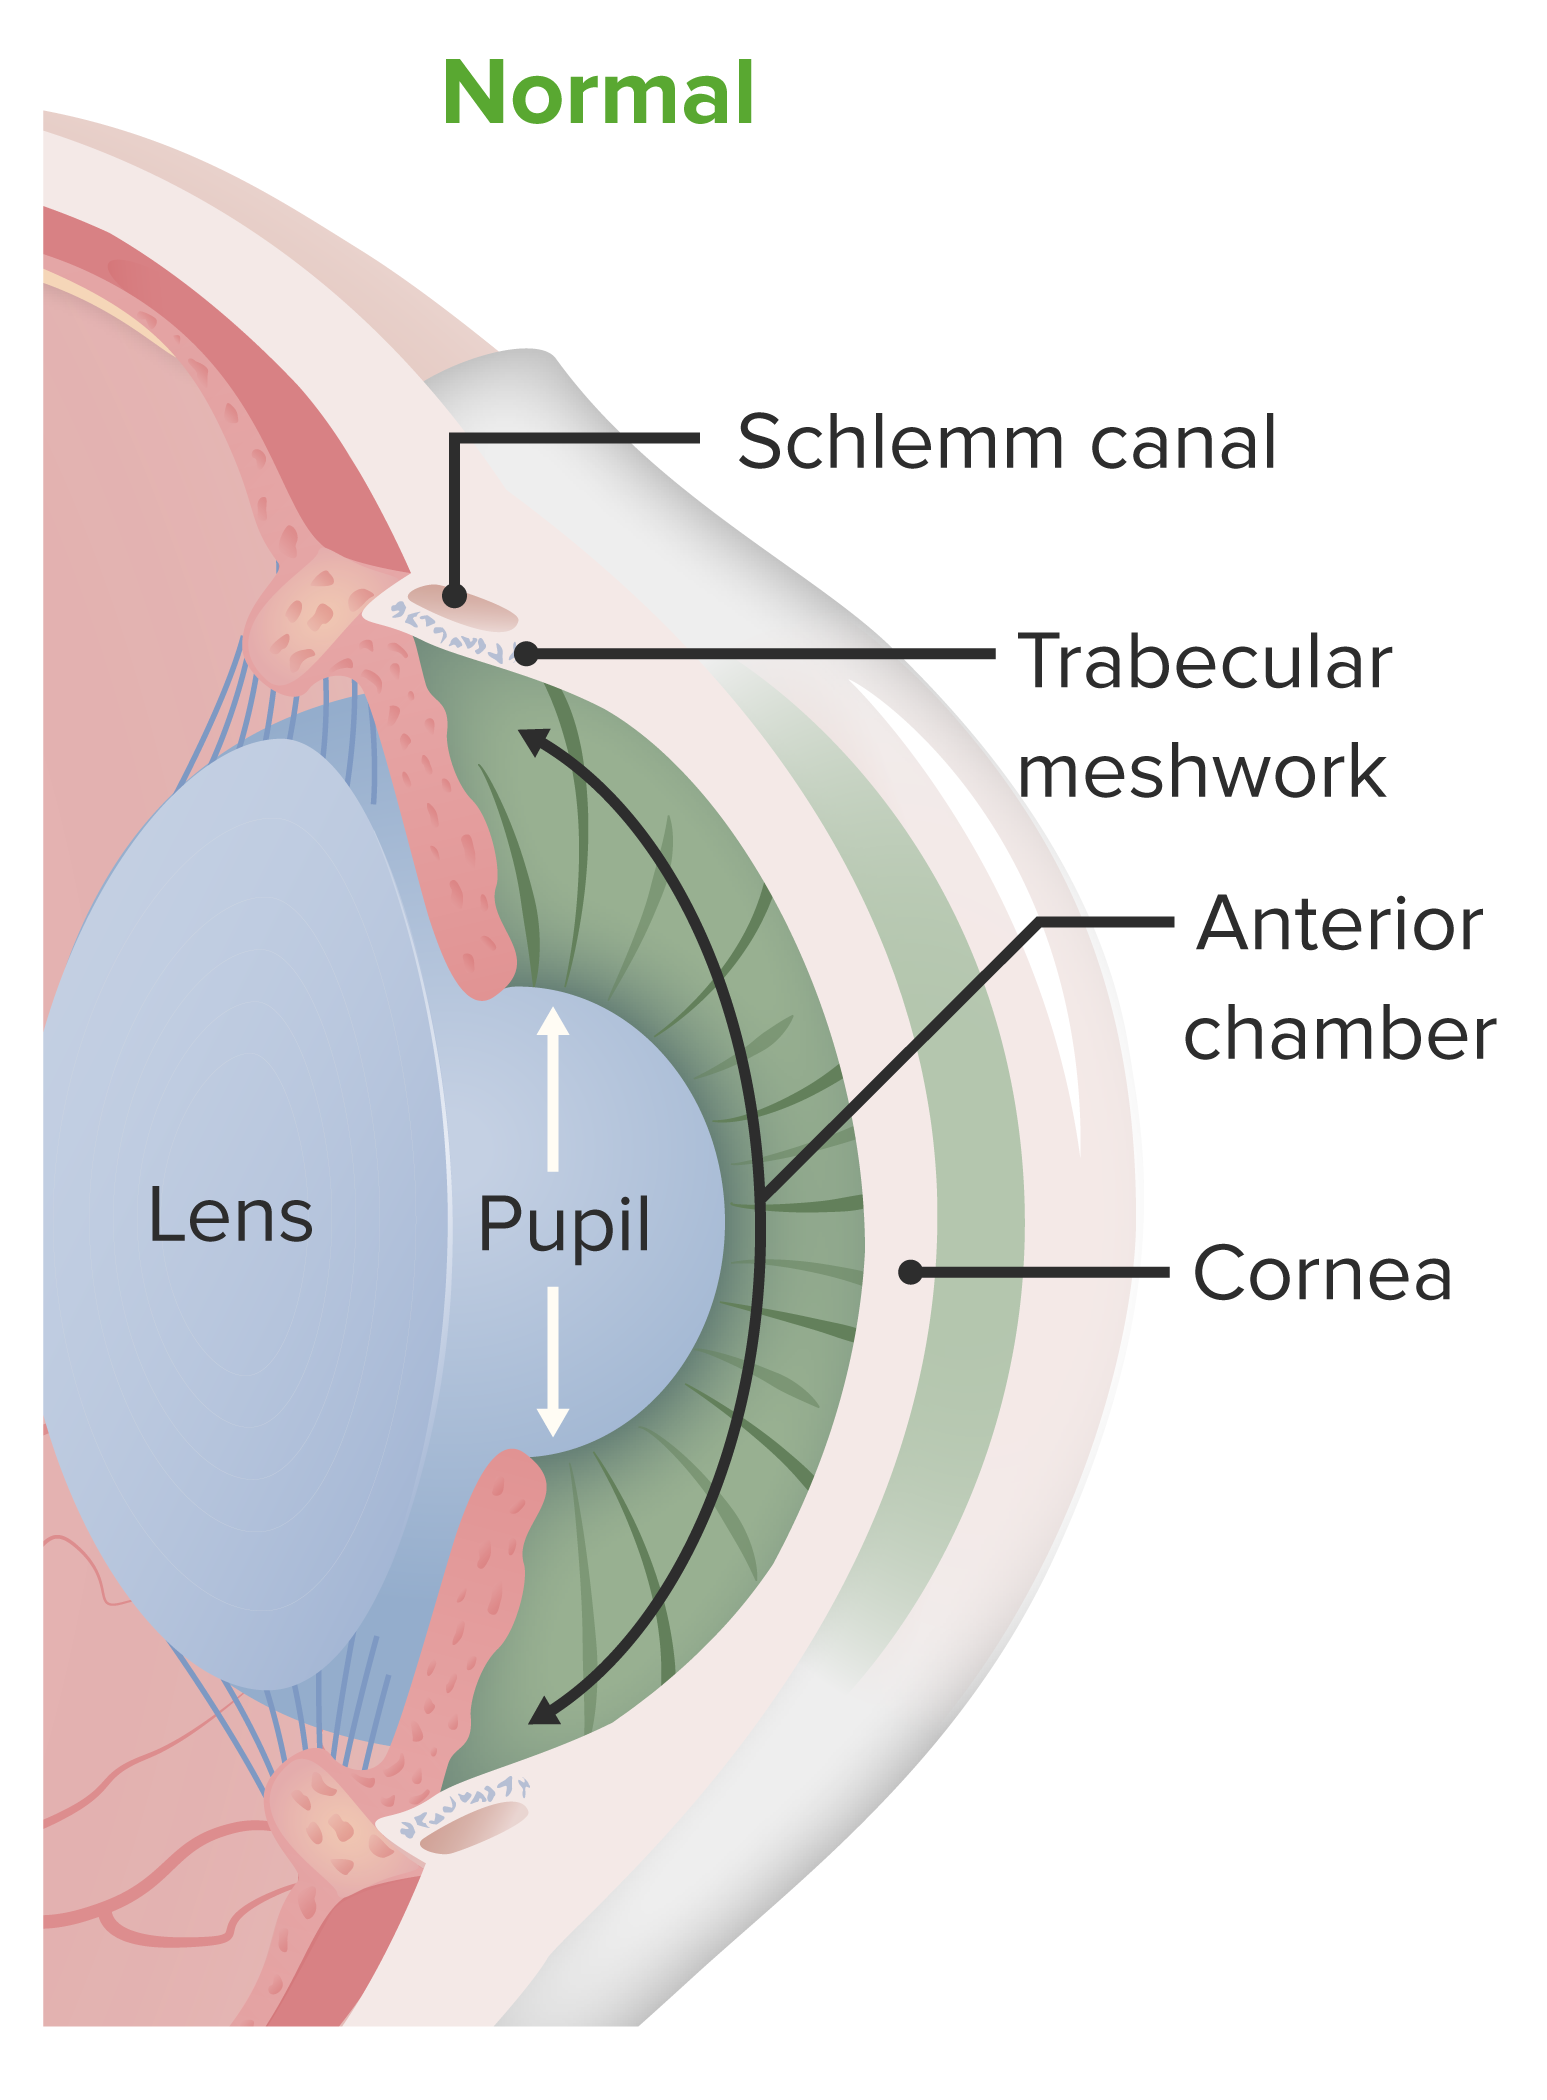 Anatomy of the anterior chamber of the eye